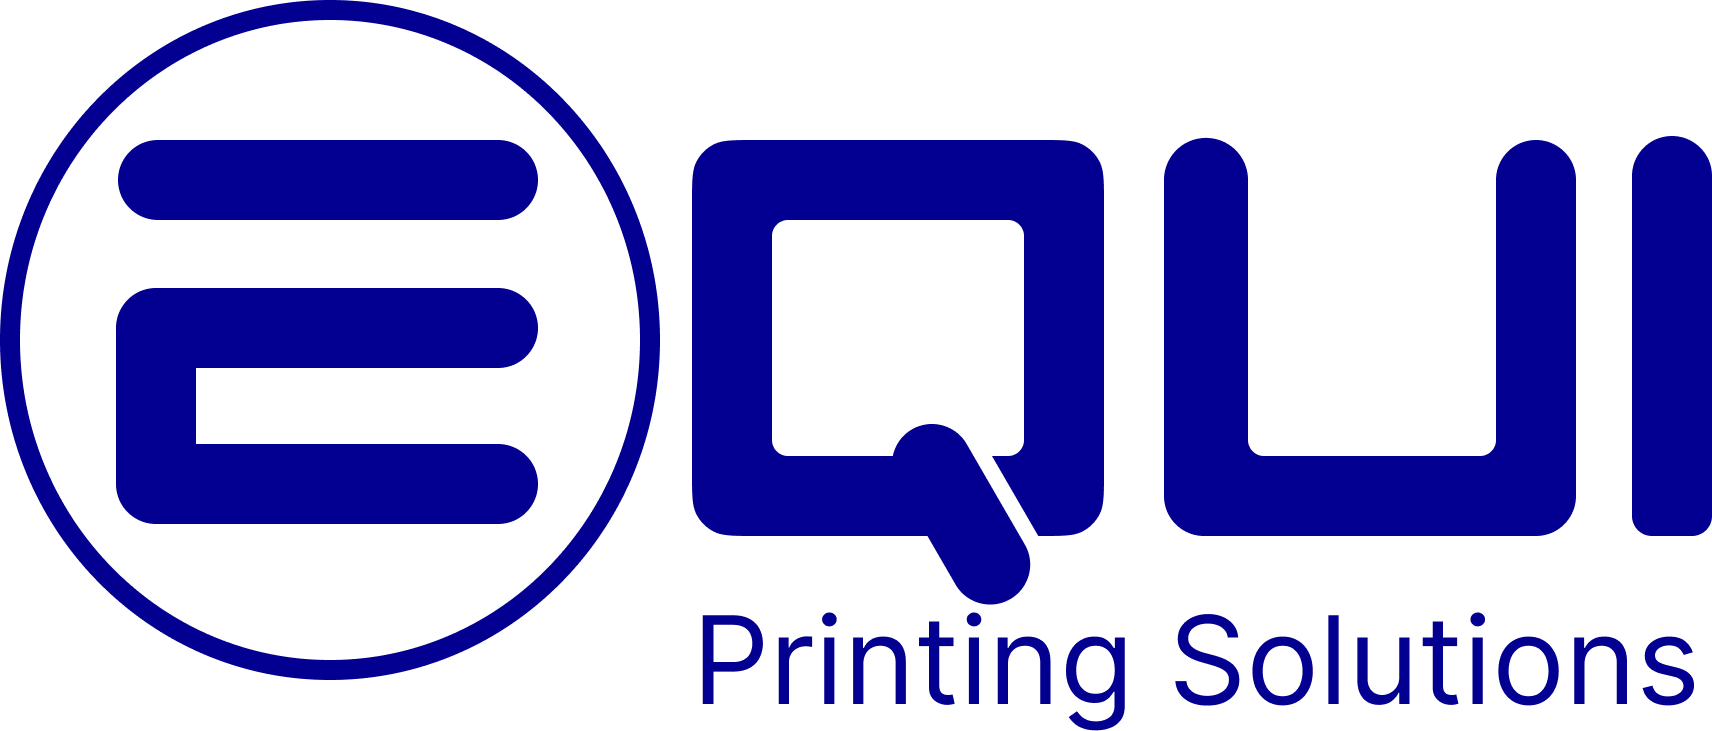 EQUI Printing Solutions